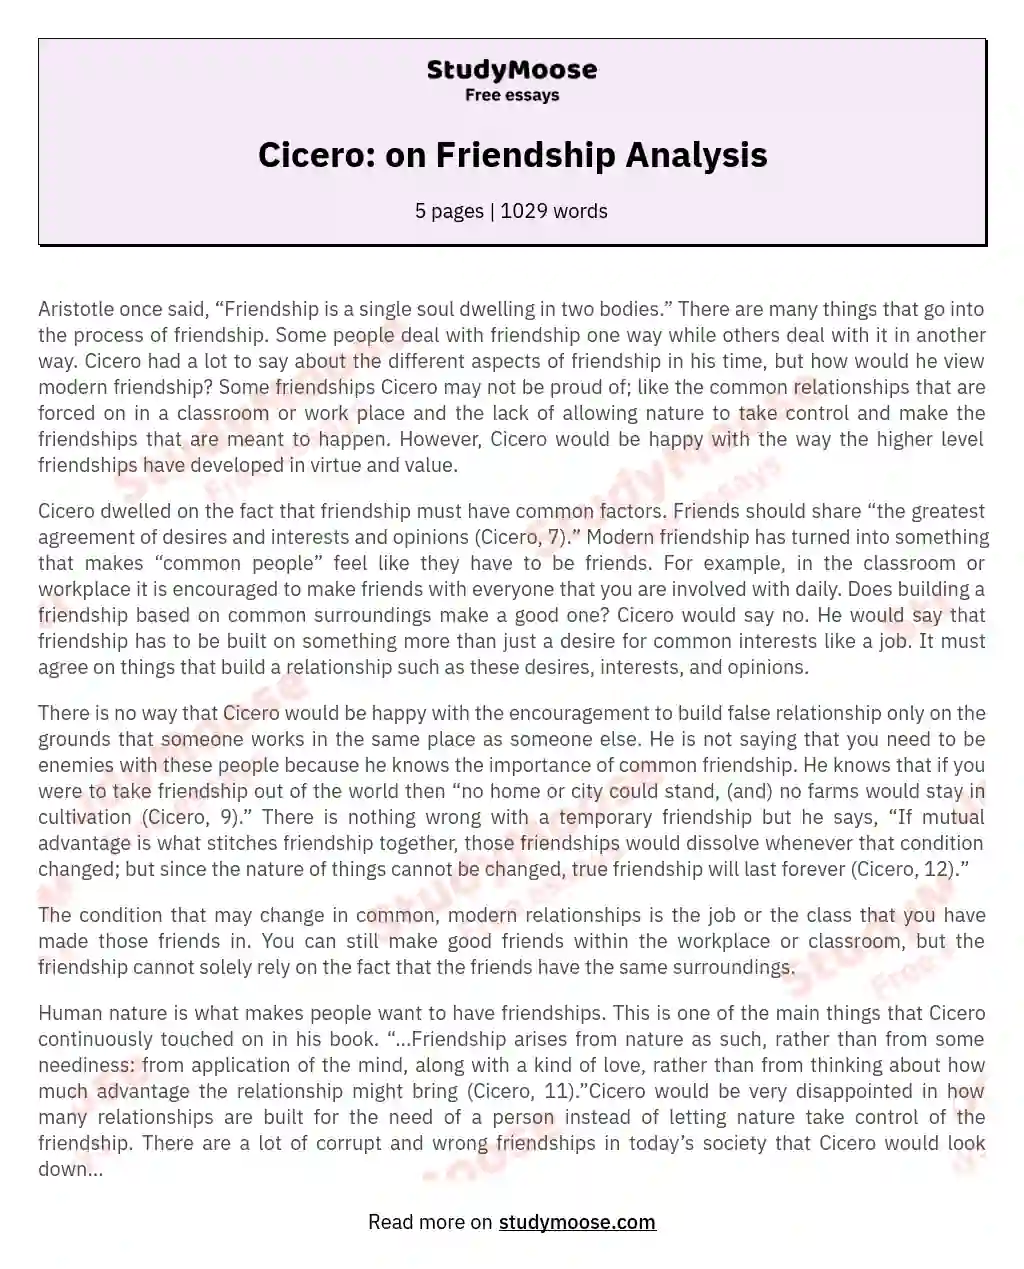 Cicero: on Friendship Analysis essay